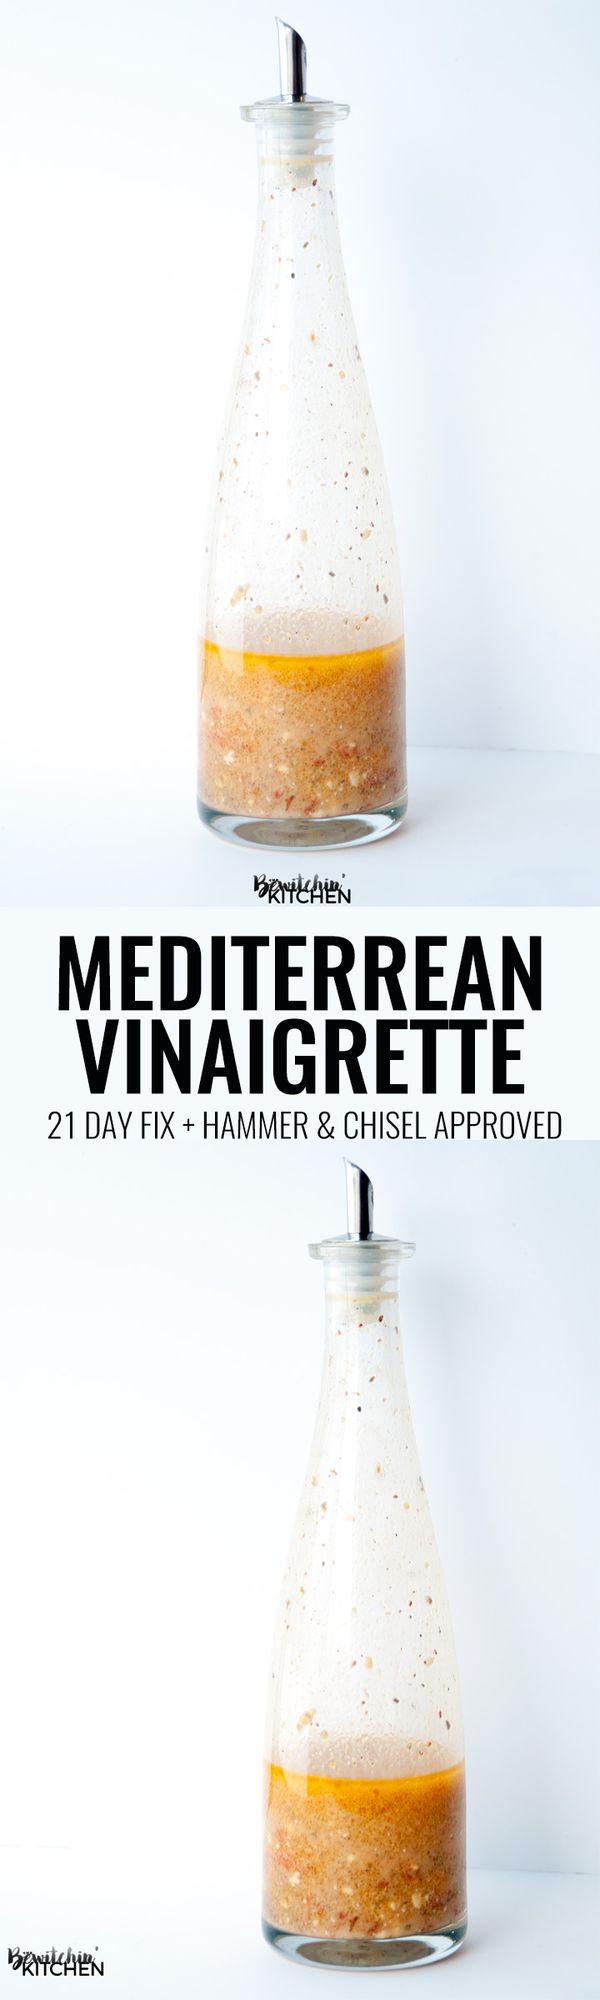 Mediterranean Vinaigrette - 21 Day Fix Approved